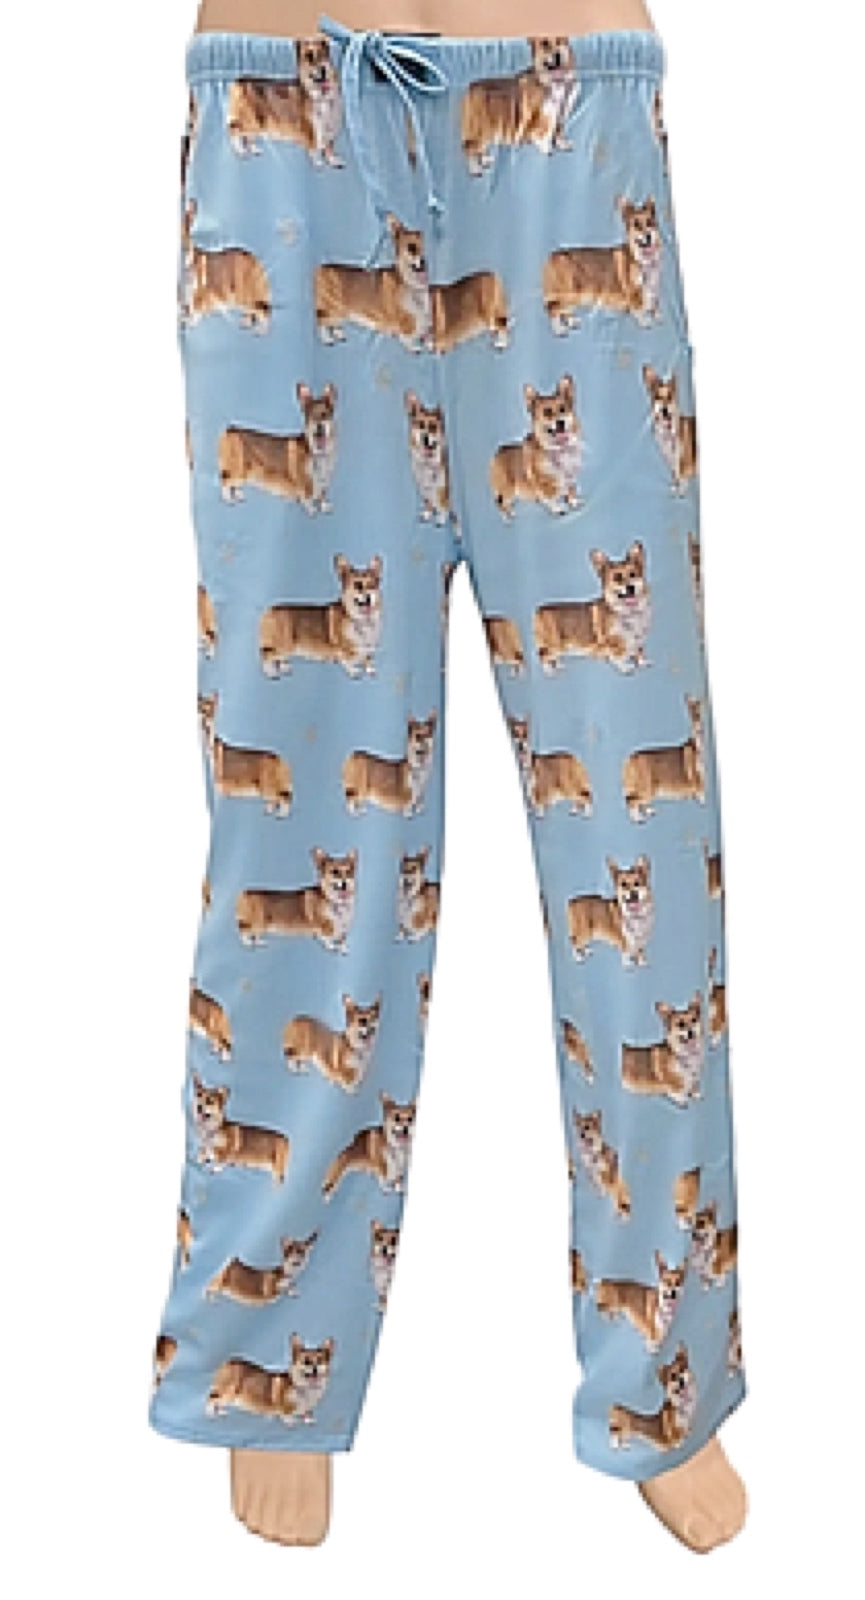 Comfies Pajama Pants - Welsh Corgi